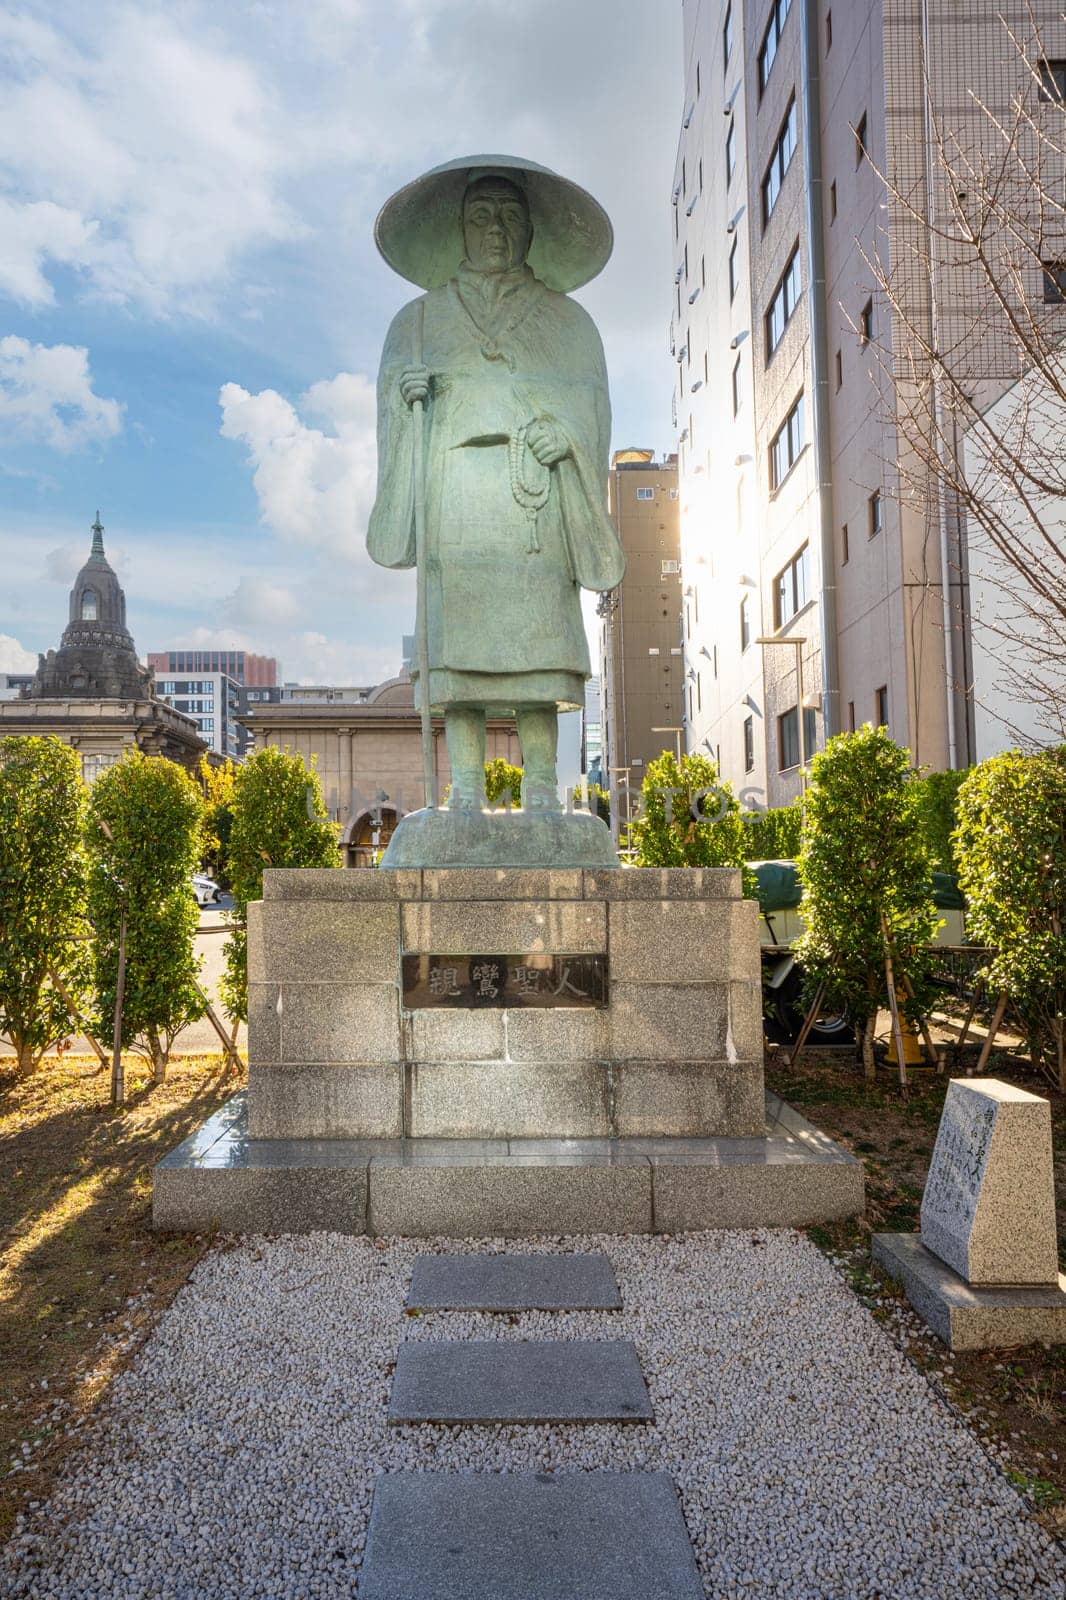 Saint Shinran Statue in Tokyo, Japan by sergiodv